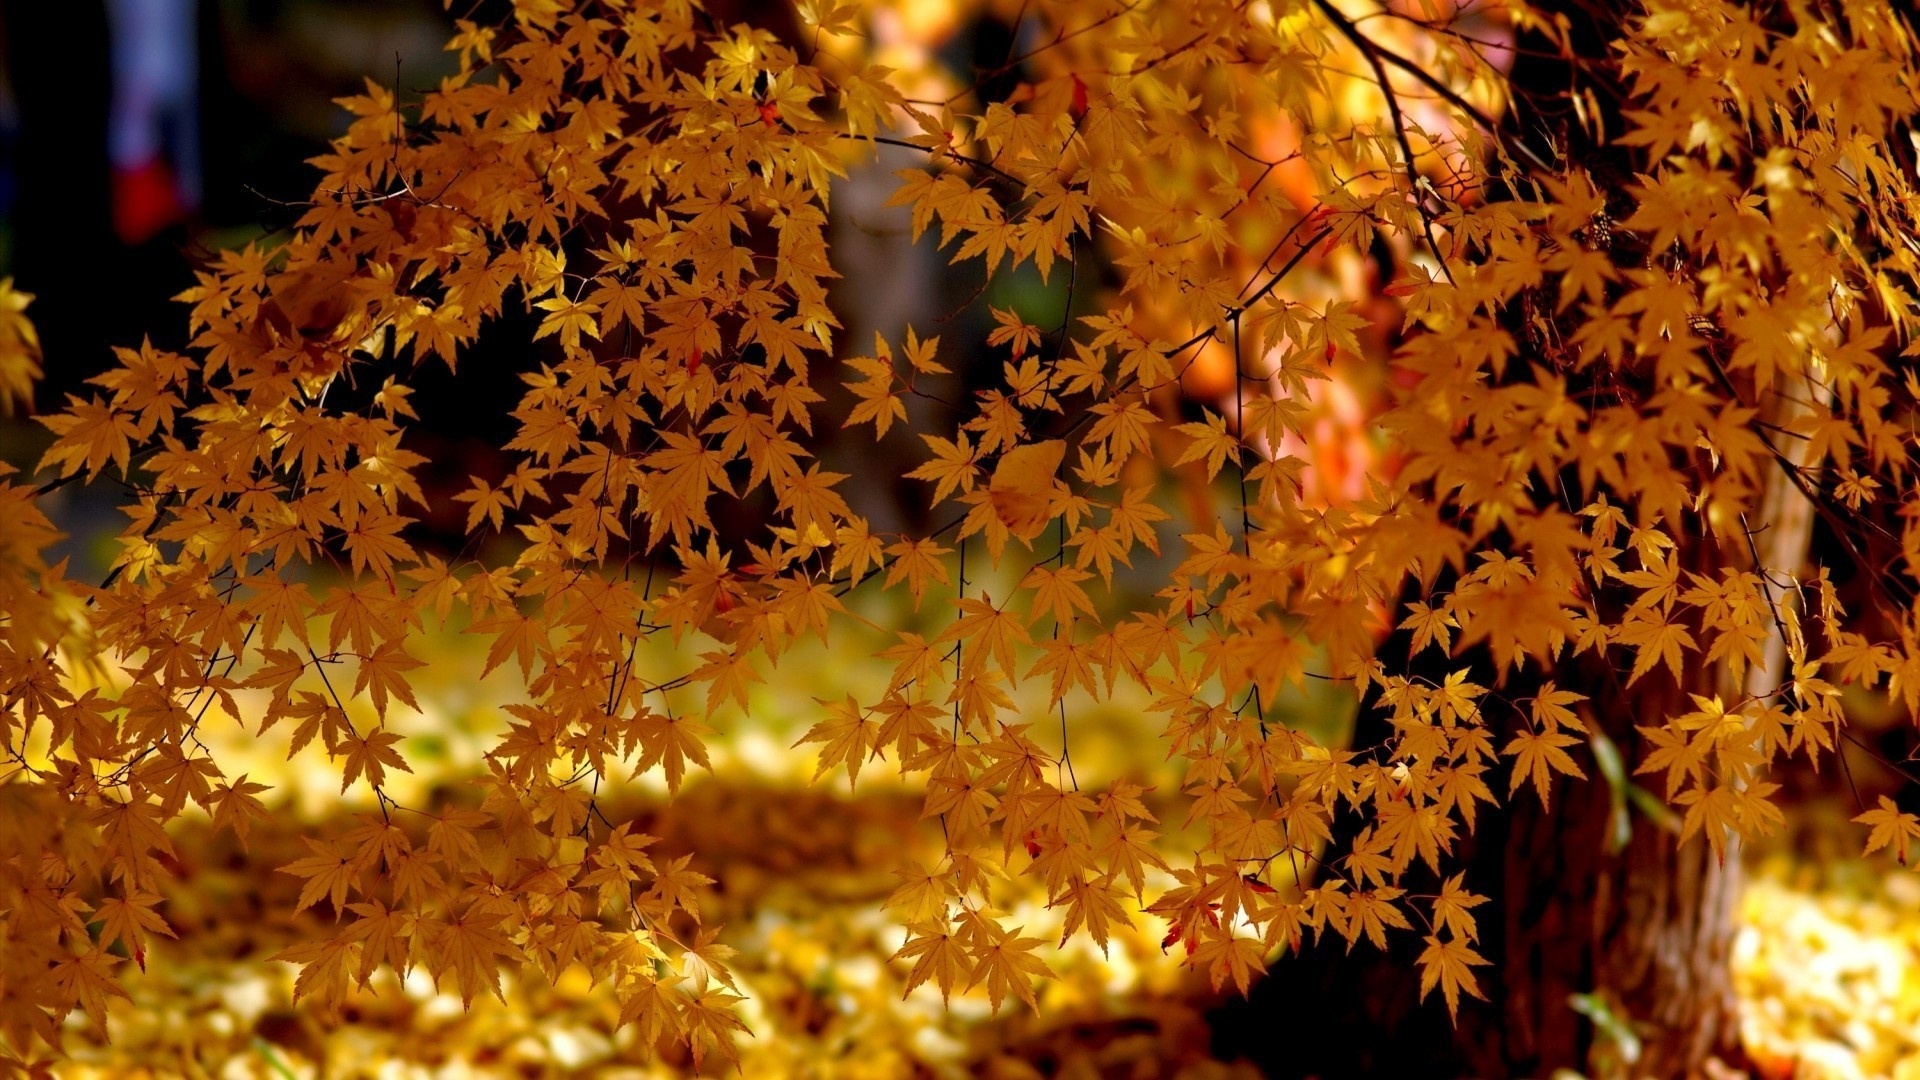 Autumn hd background